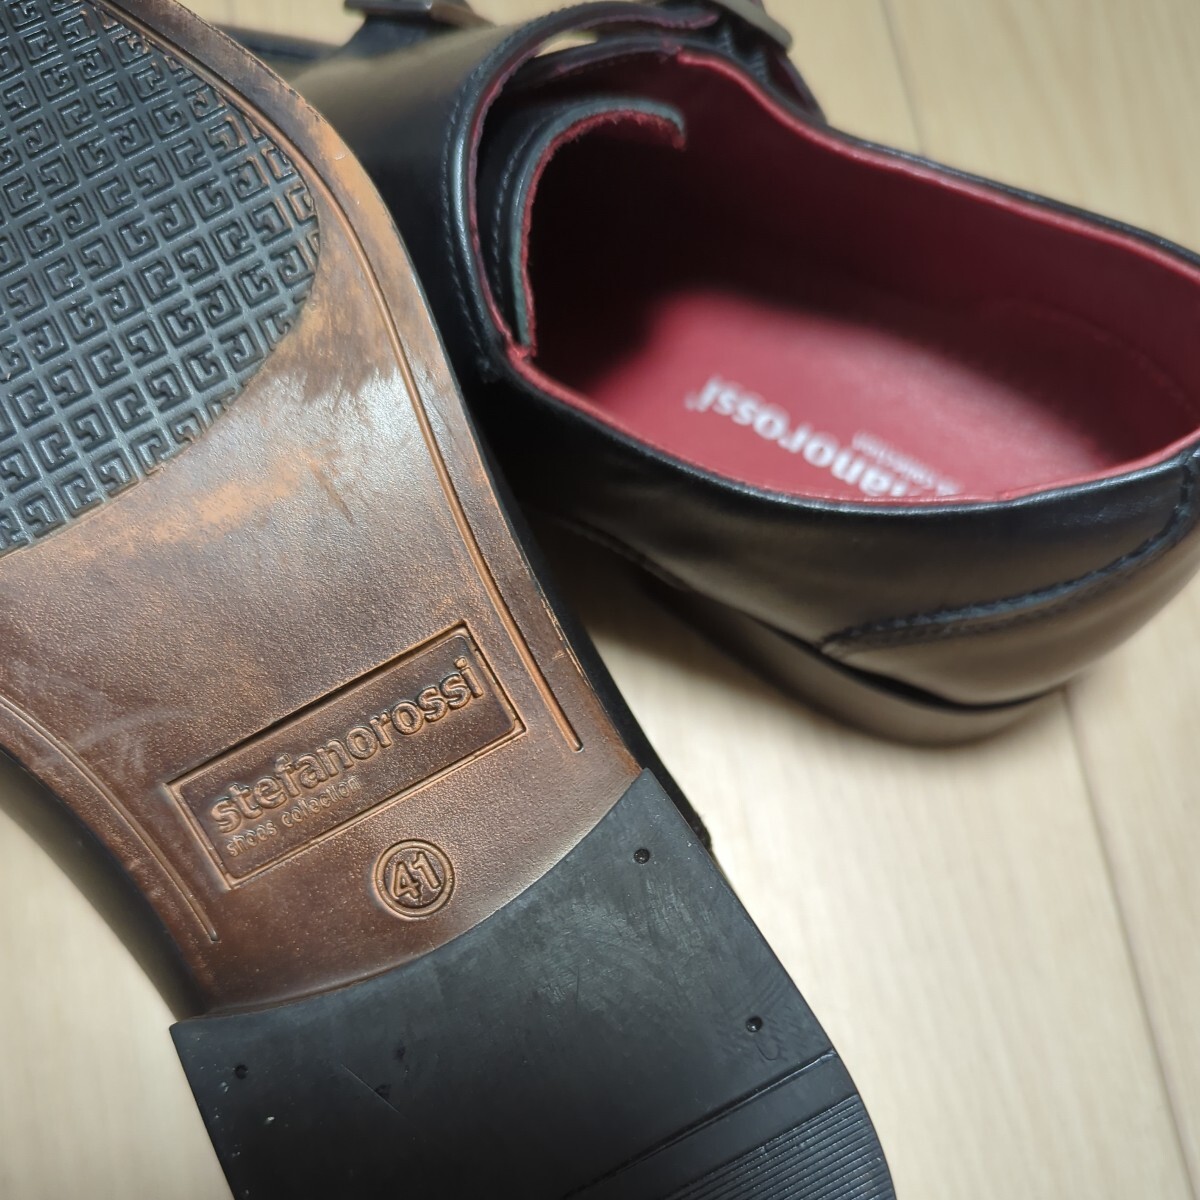 stefanorossi サイズ 26.0cm ダブルモンクストラップ ステファノロッシ メンズ ブラック 本革 ビジネス 本皮 革靴 インナーレッド 中古品_画像10